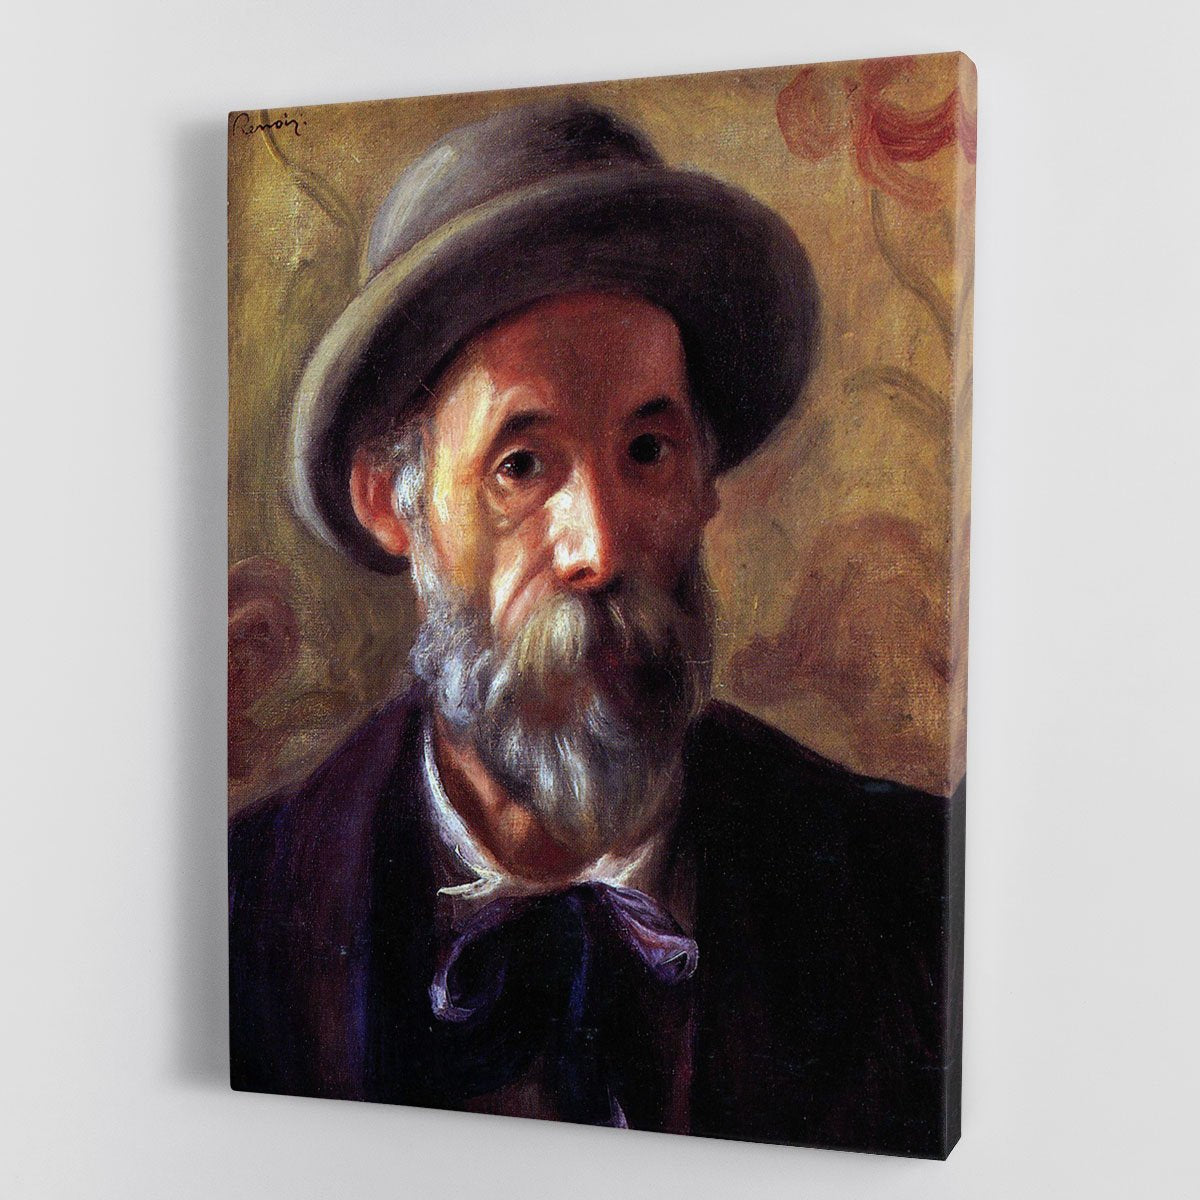 Self Portrait 1 by Renoir Canvas Print or Poster